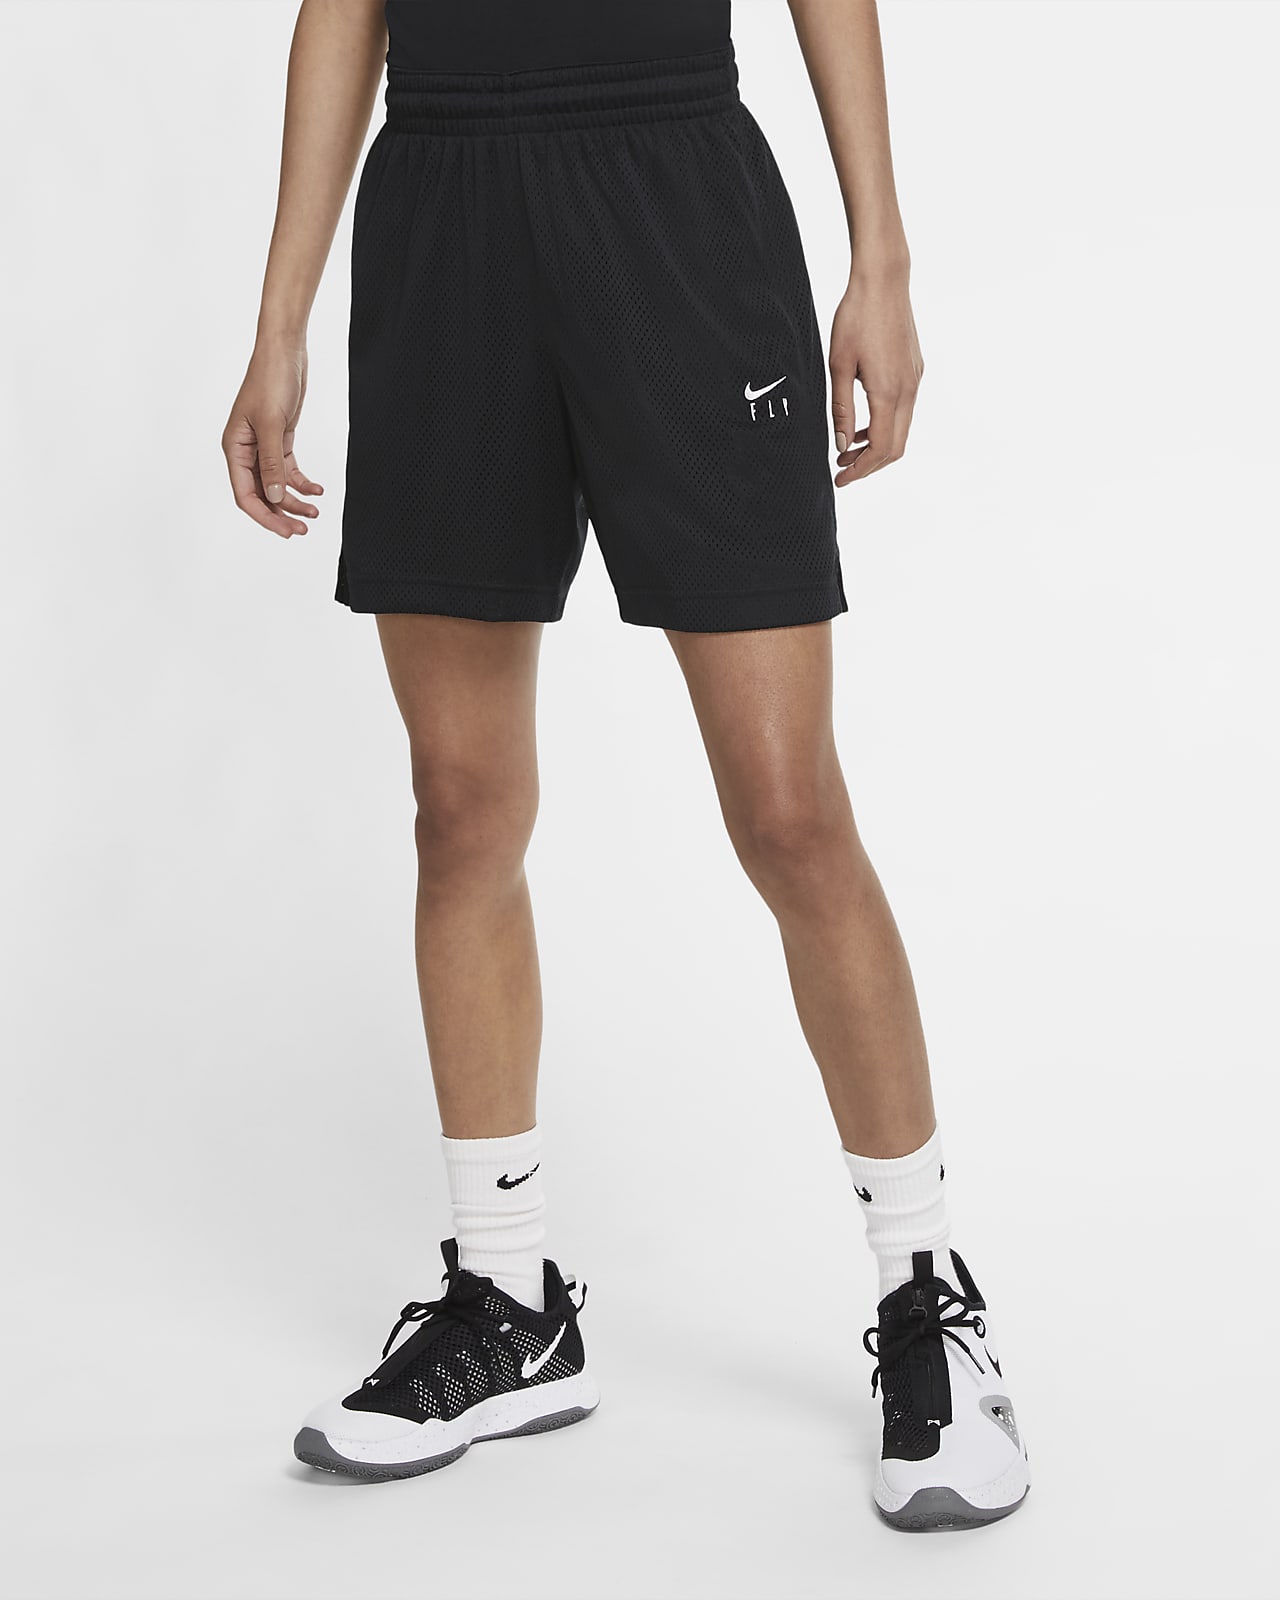 Dámské basketbalové kraťasy Nike Swoosh Fly